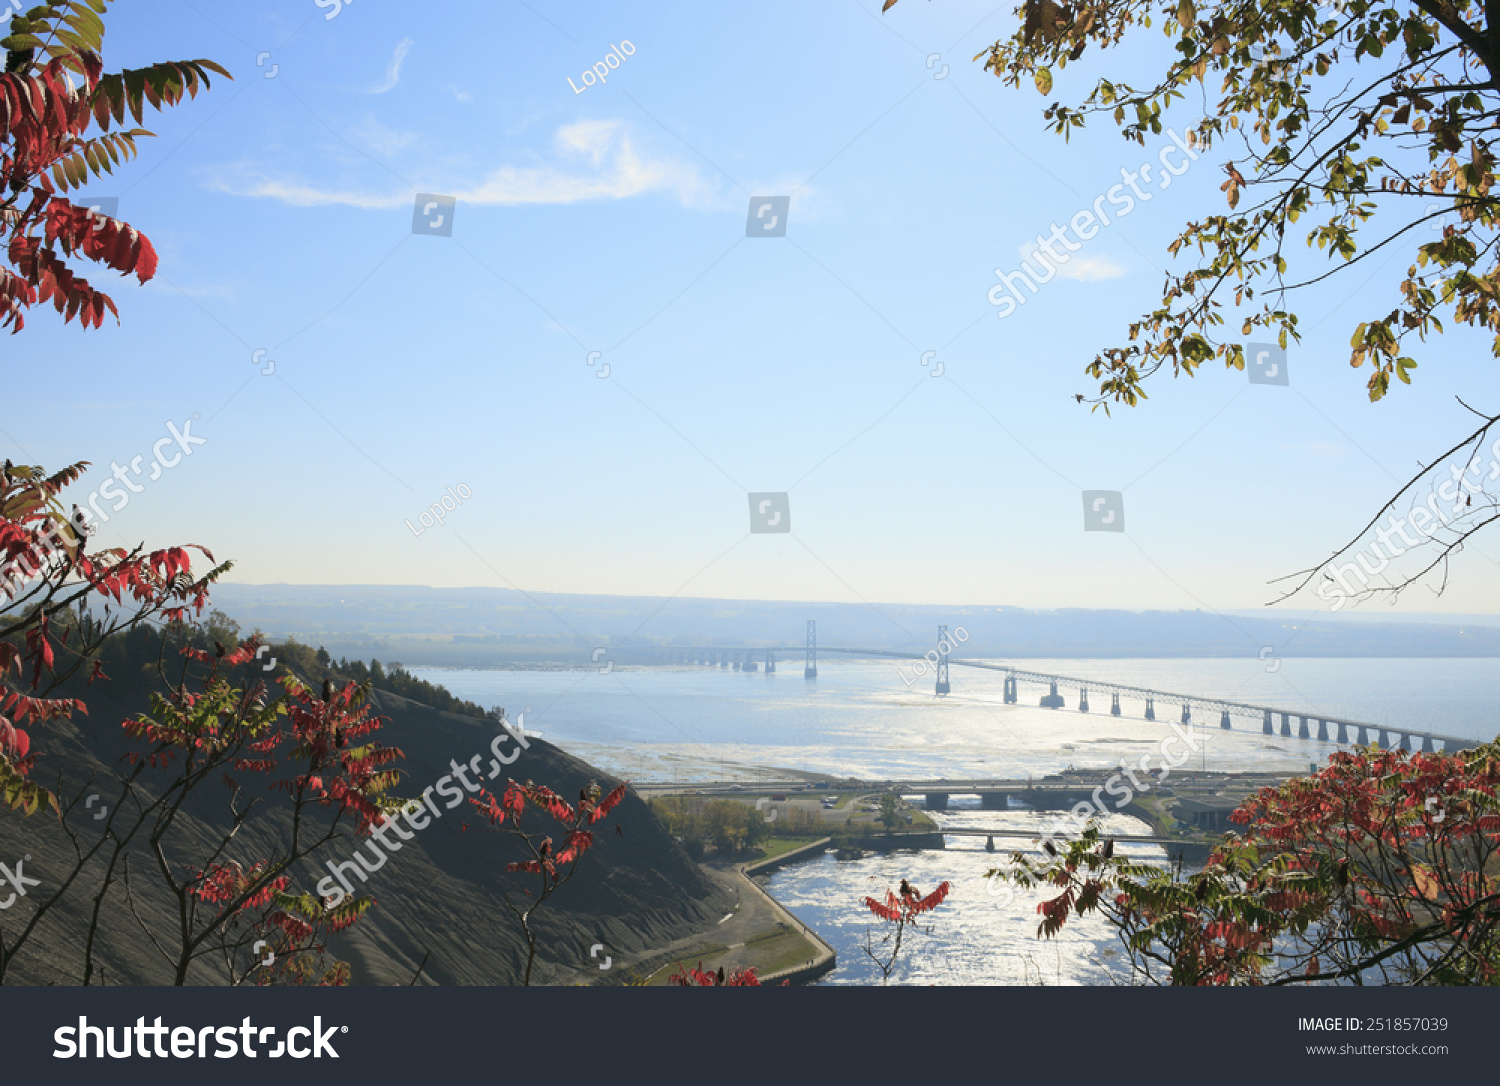 Bridge across a river, Saint Lawrence River, Quebec, Canada #251857039